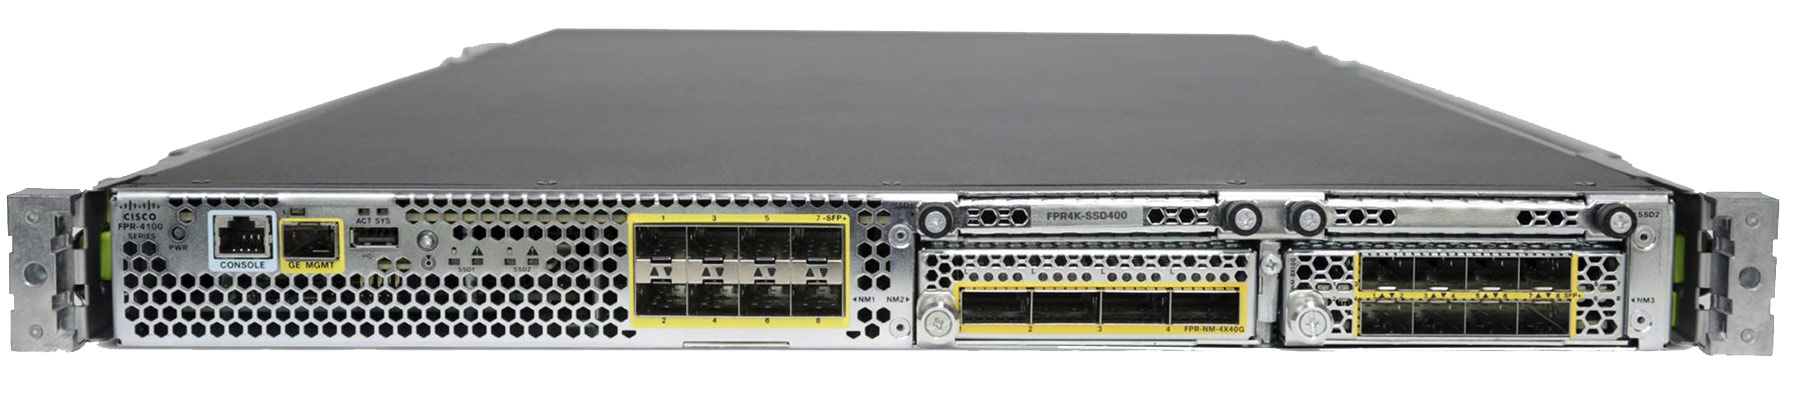 FPR4150-NGIPS-K9 Cisco Firepower 4100 NGIPS - Cisco Firepower 4100 Series - 1